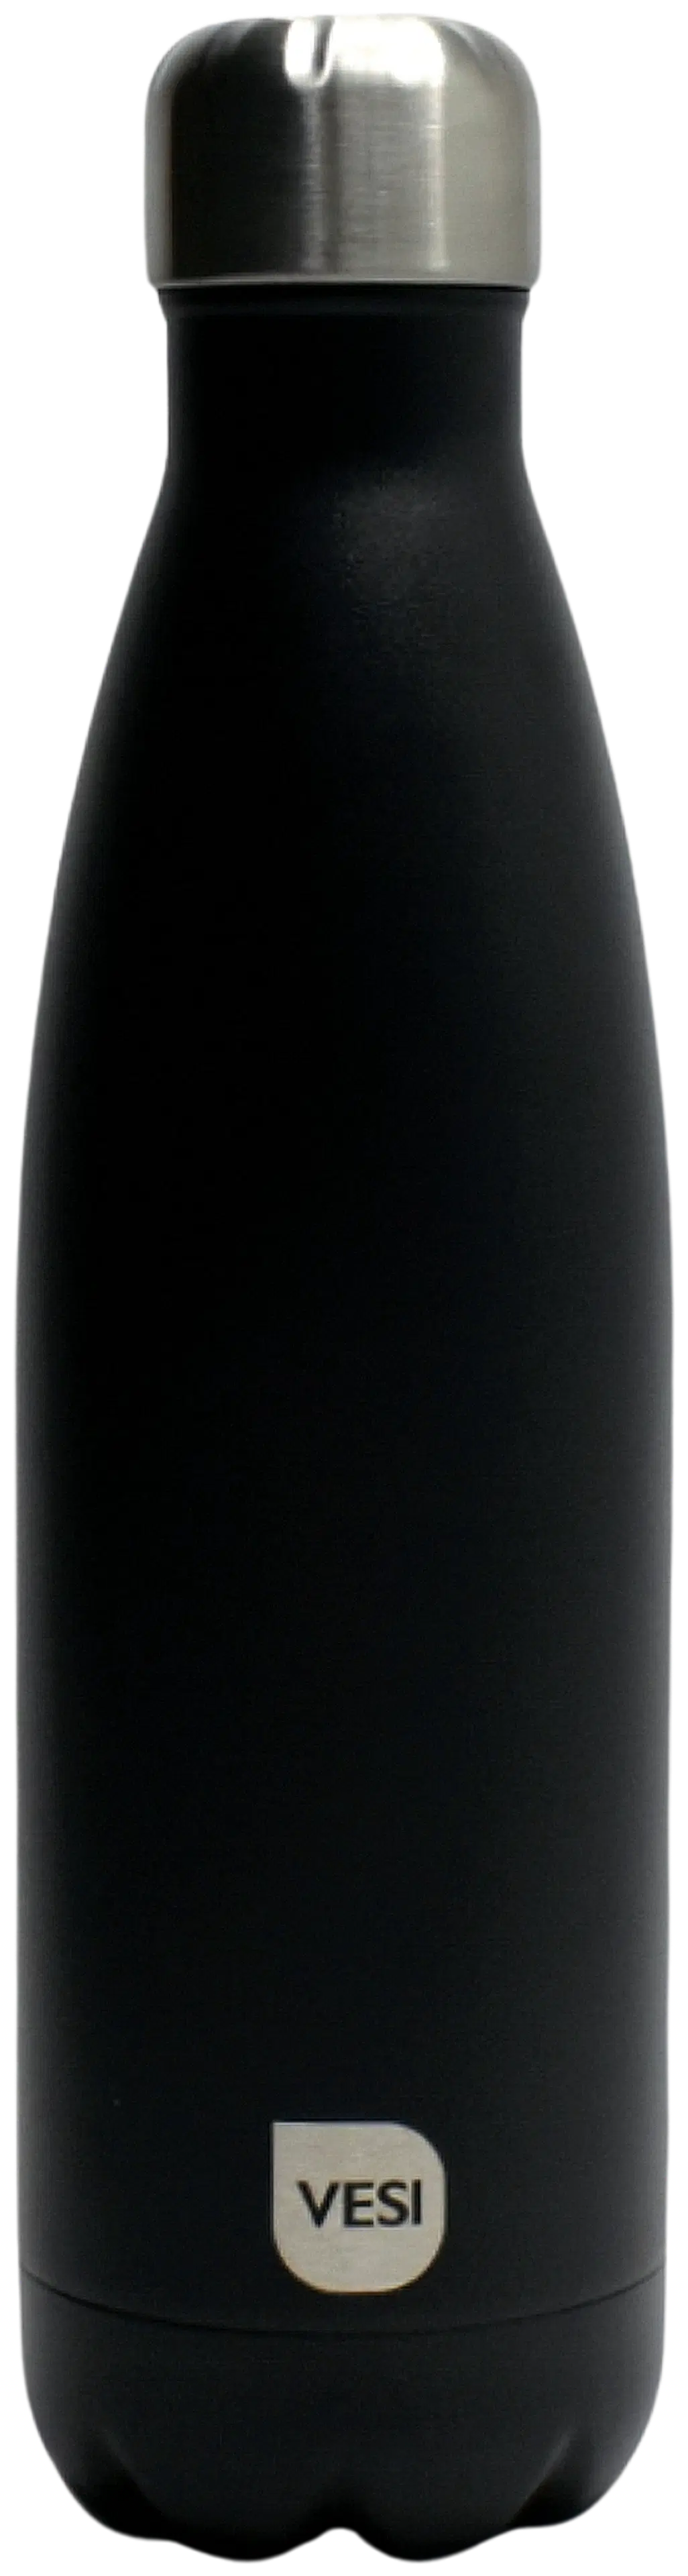 VESI Black Onyx teräksinen juomapullo 500 ml